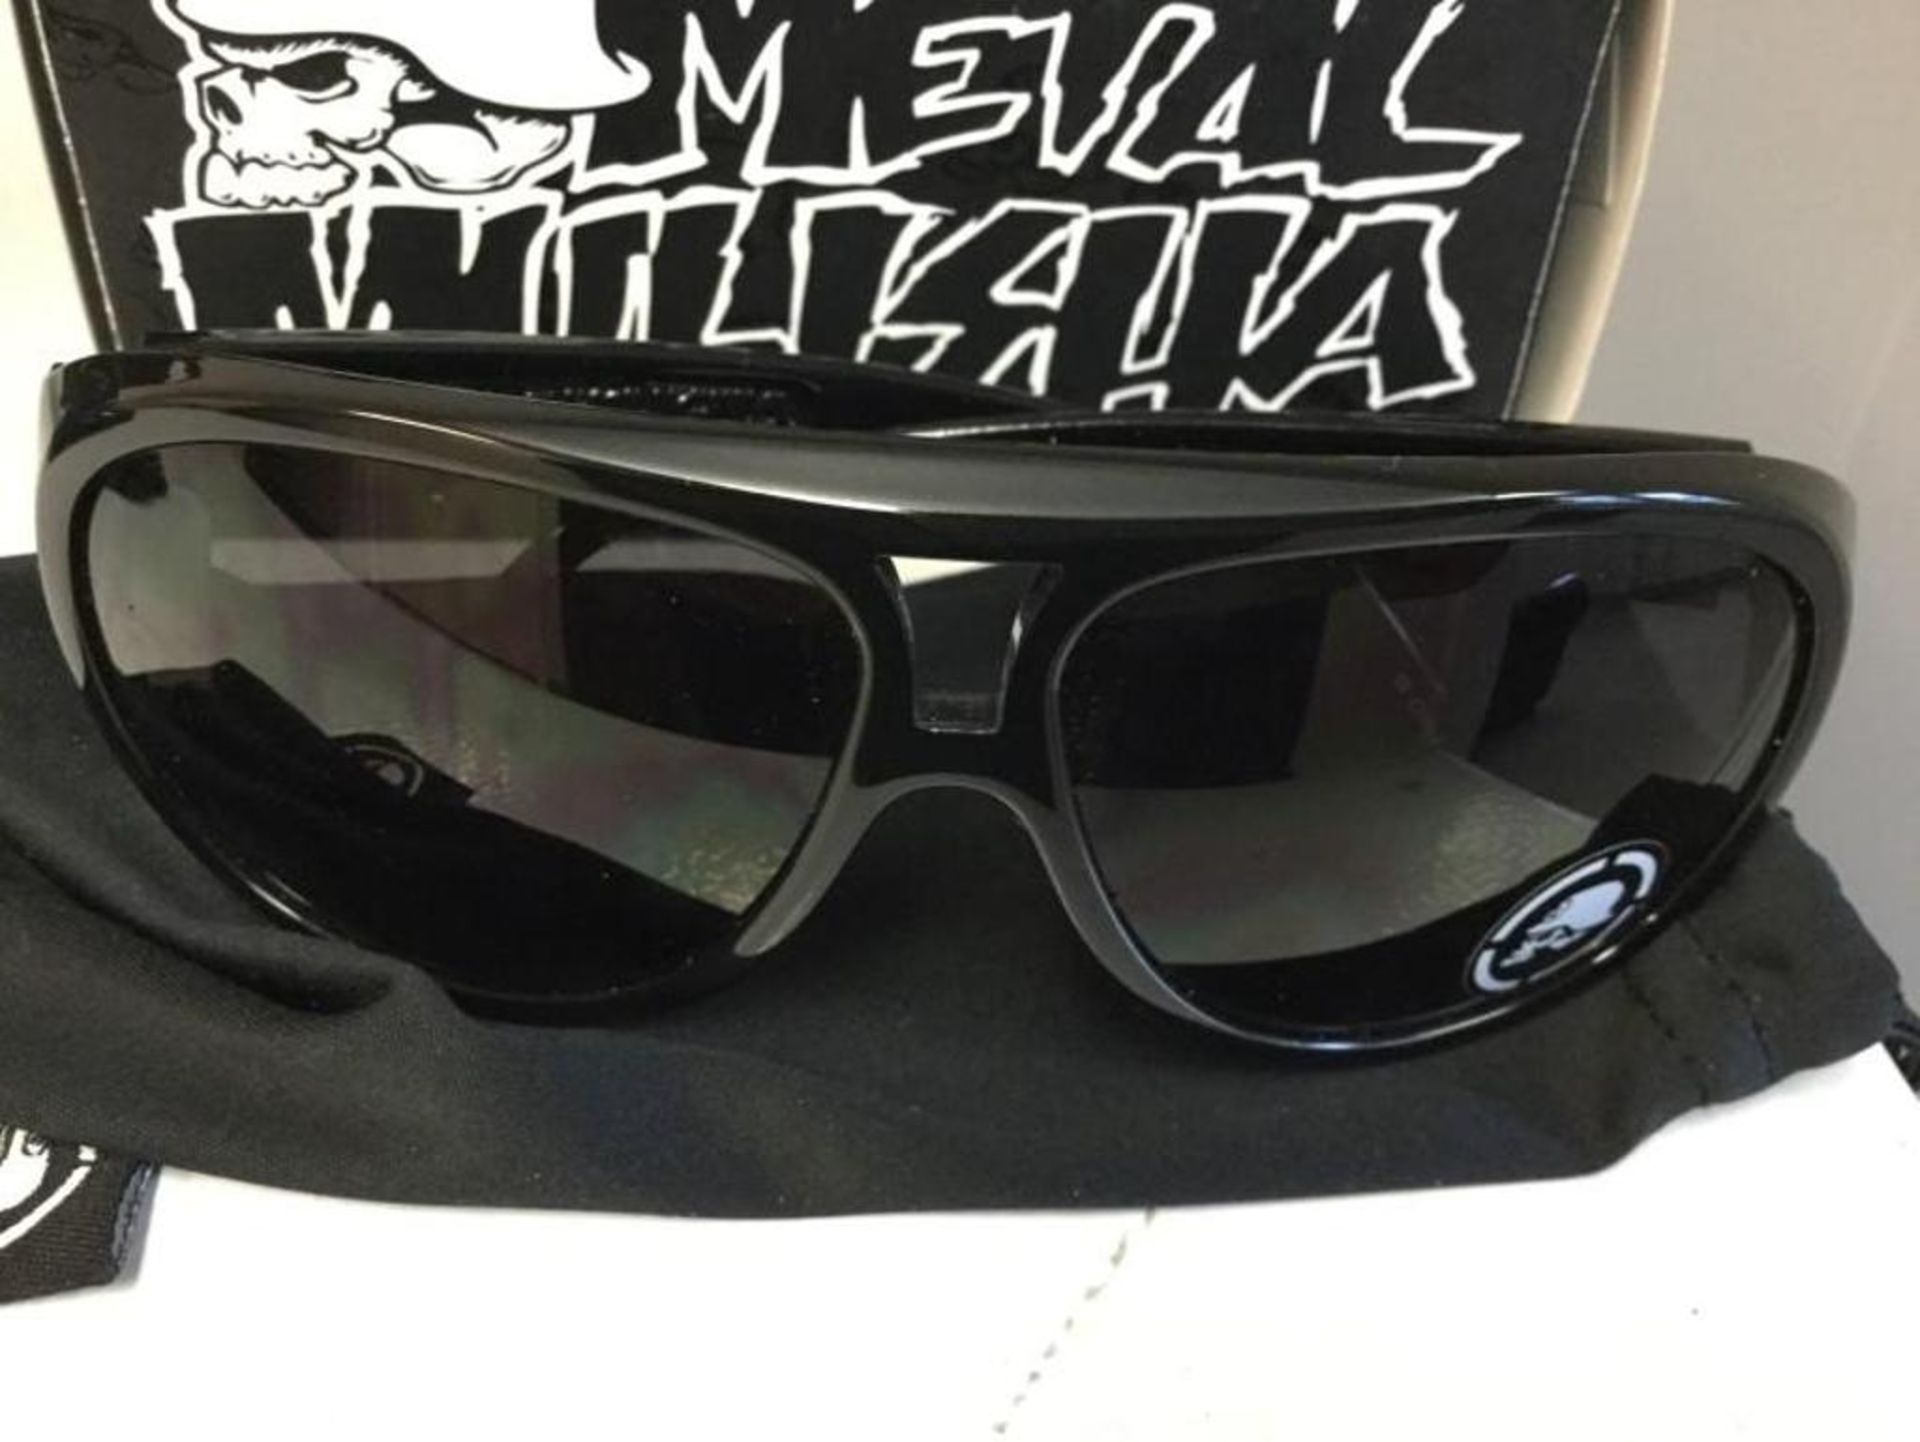 New Metal Mulisha Sunglasses